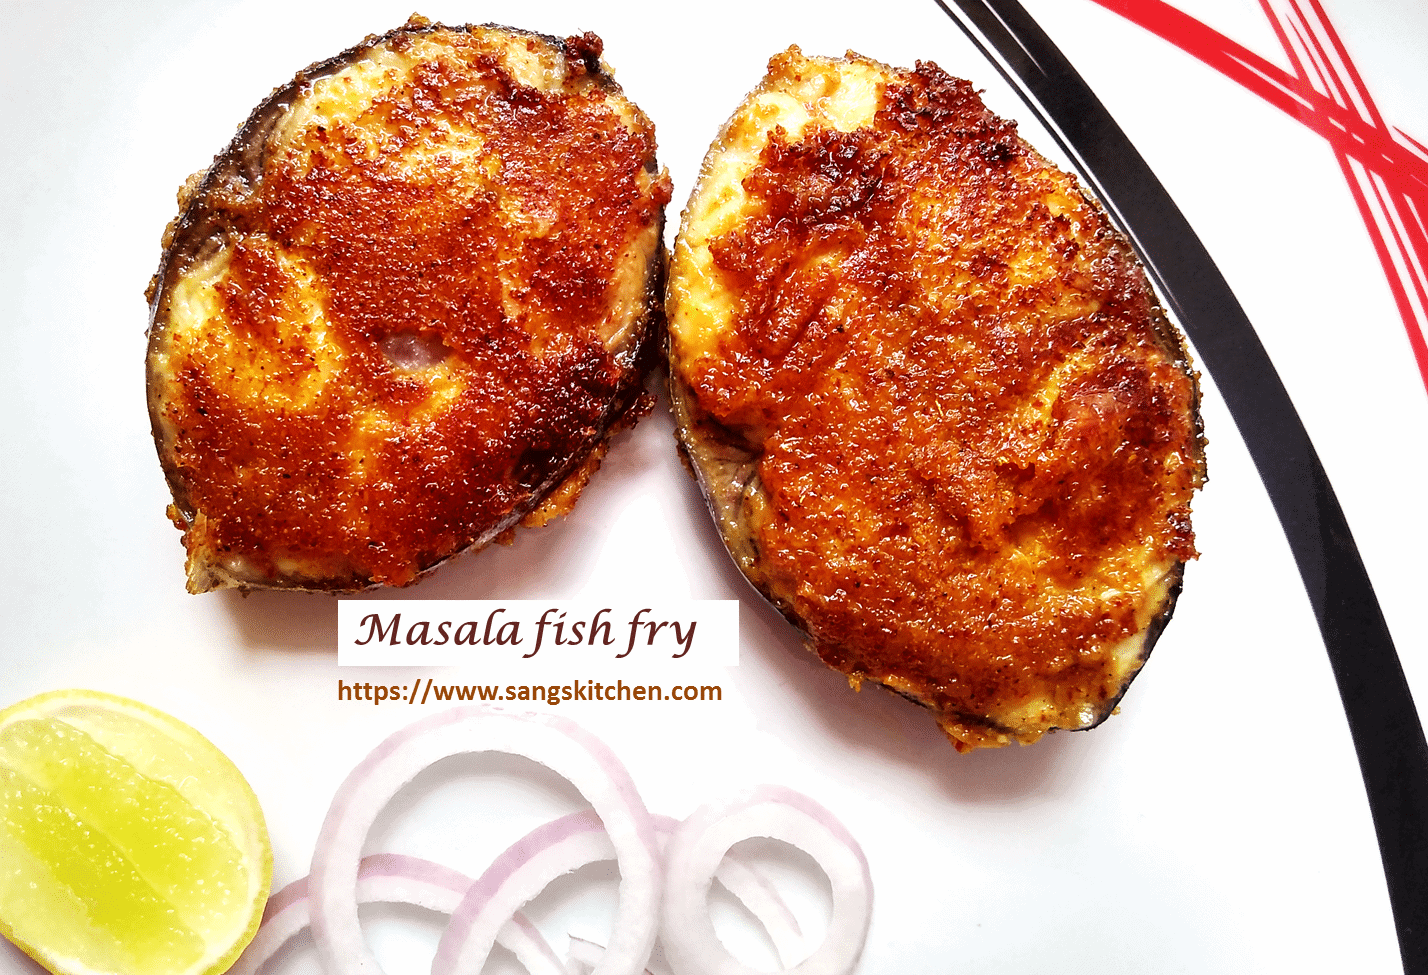 Masala fish fry - feature